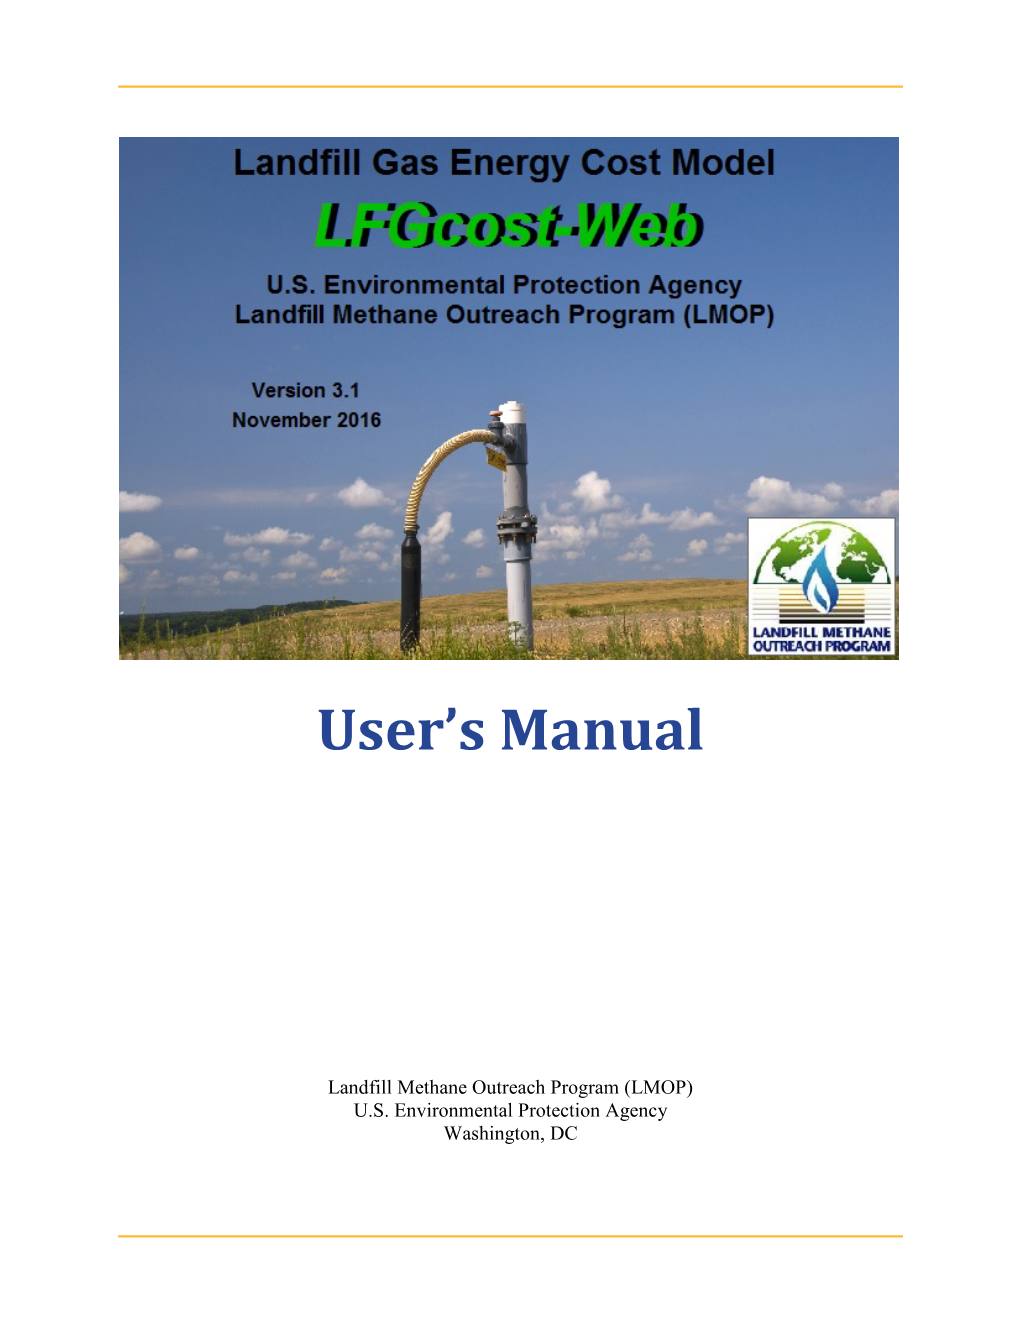 LMOP Landfill Gas Energy Cost Model (Lfgcost-Web)